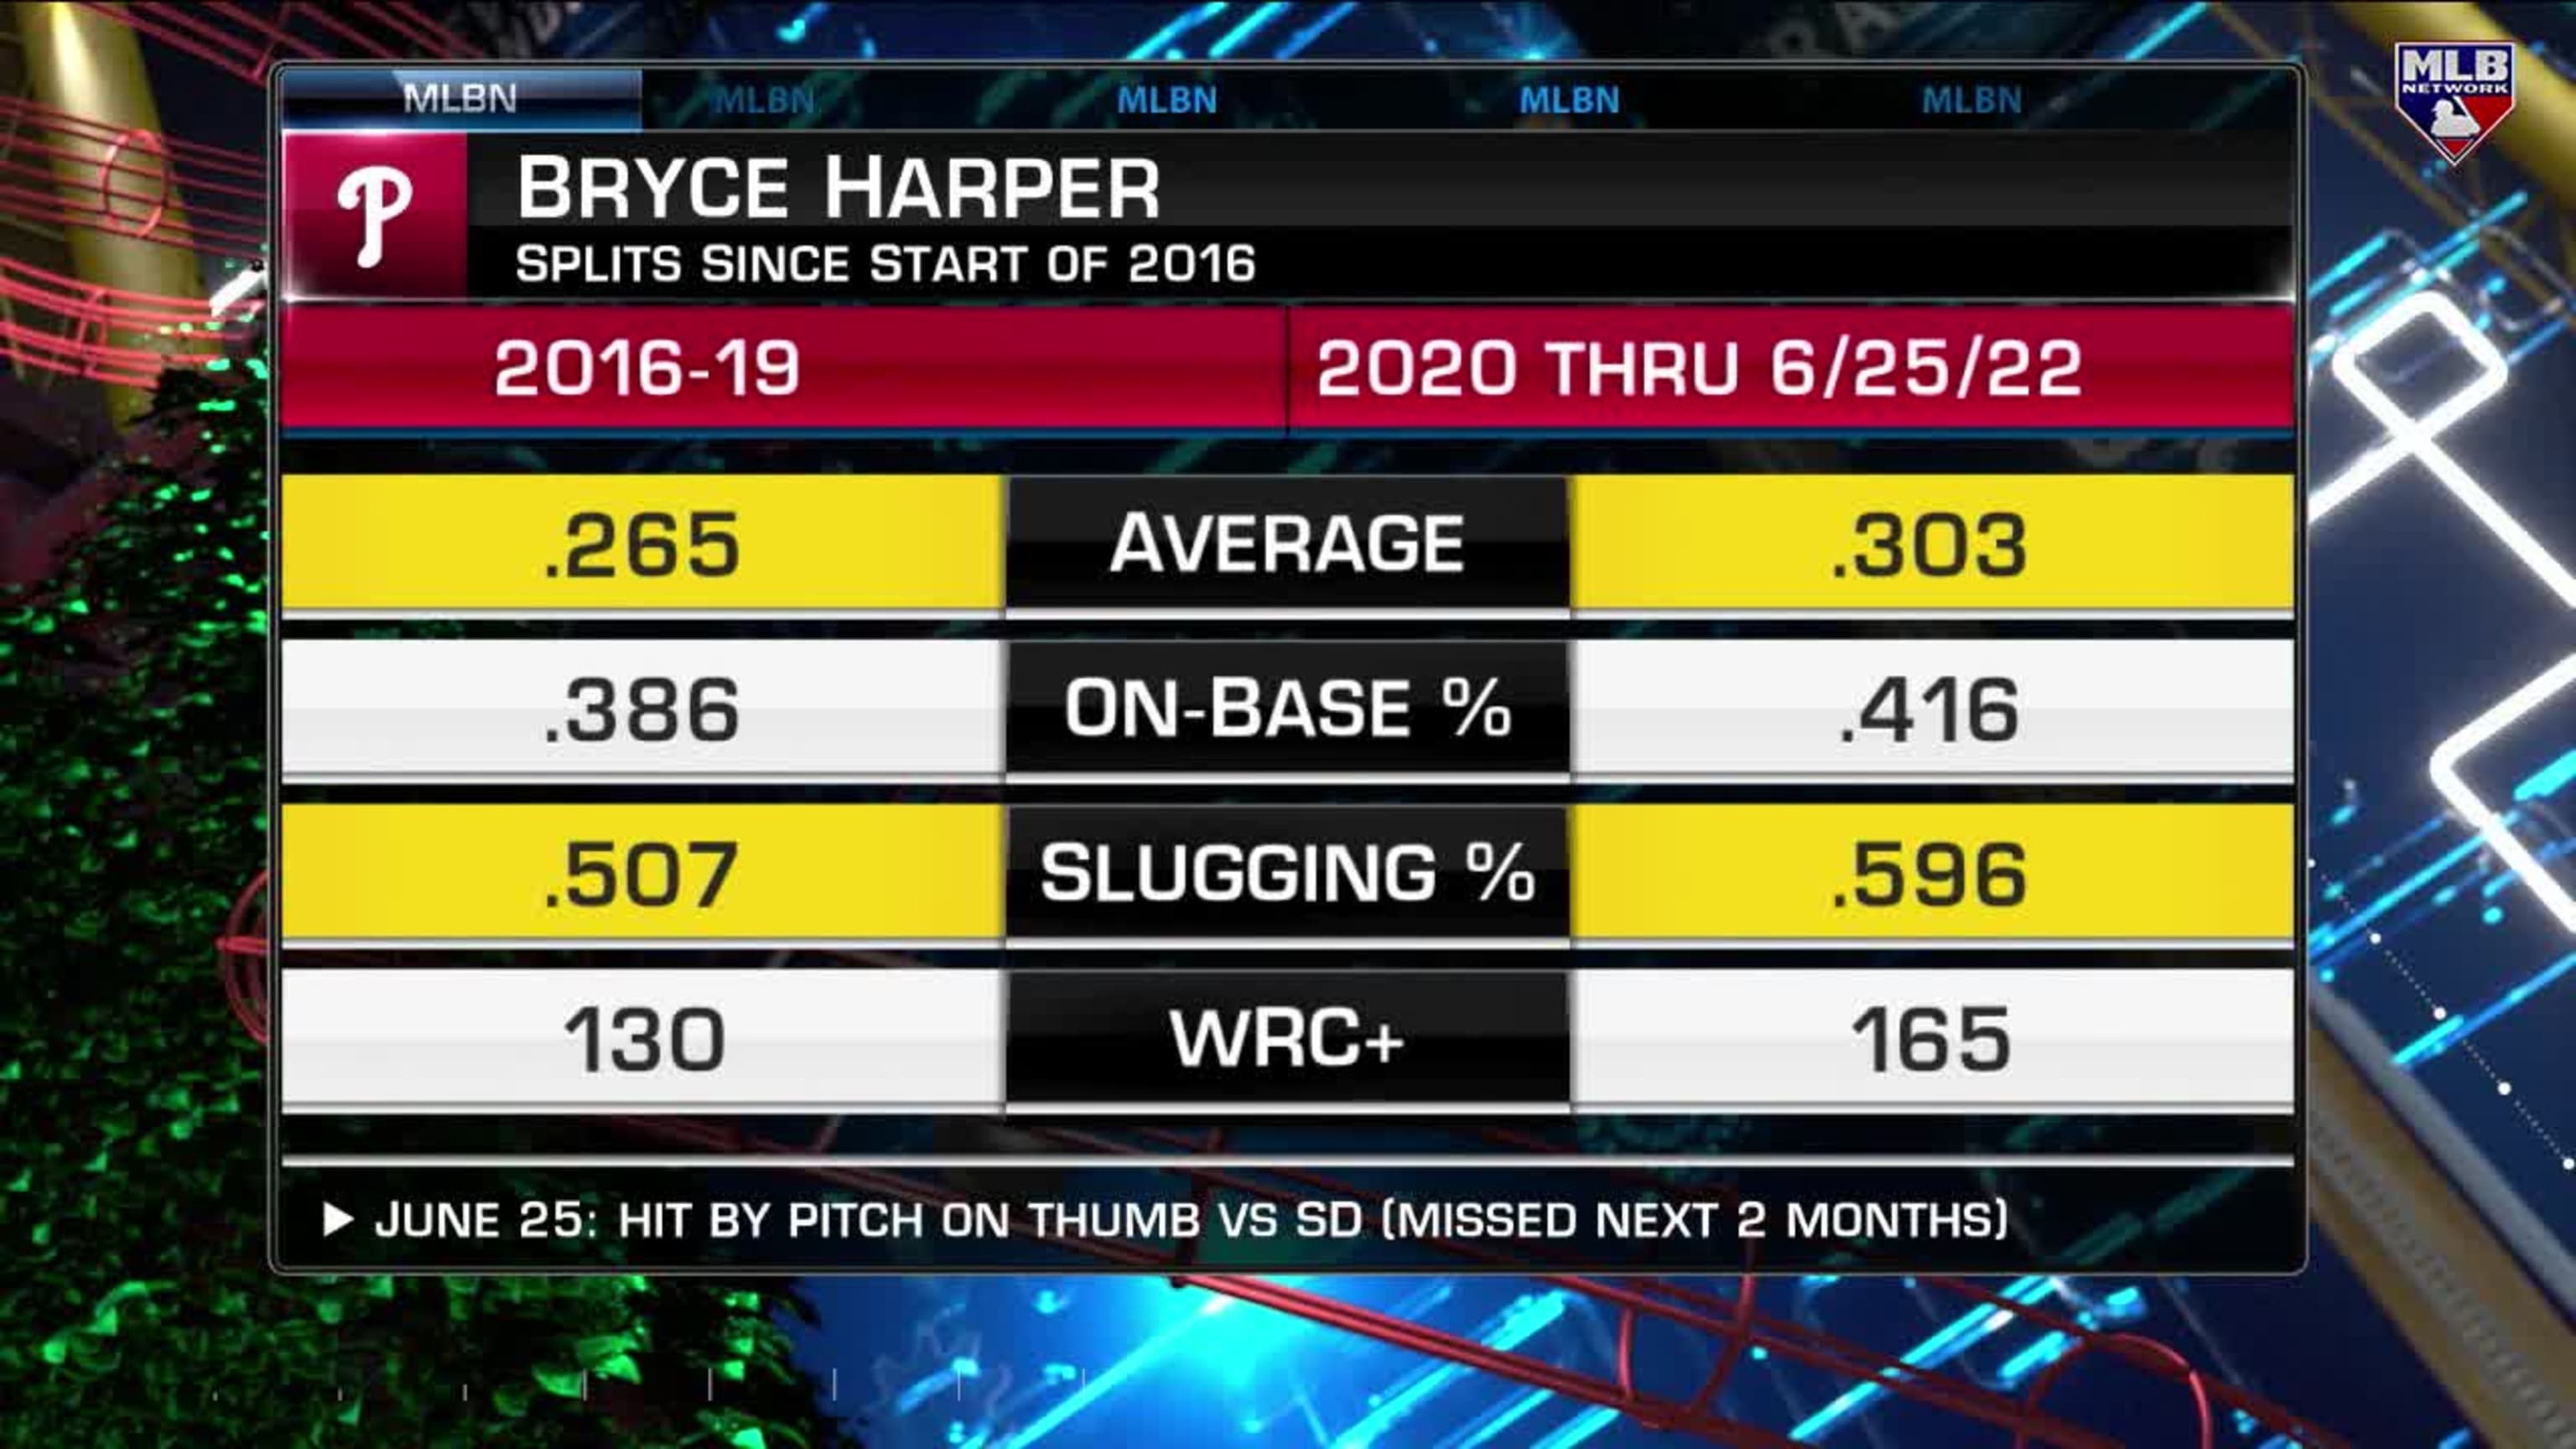 Bryce Harper's tremendous season 